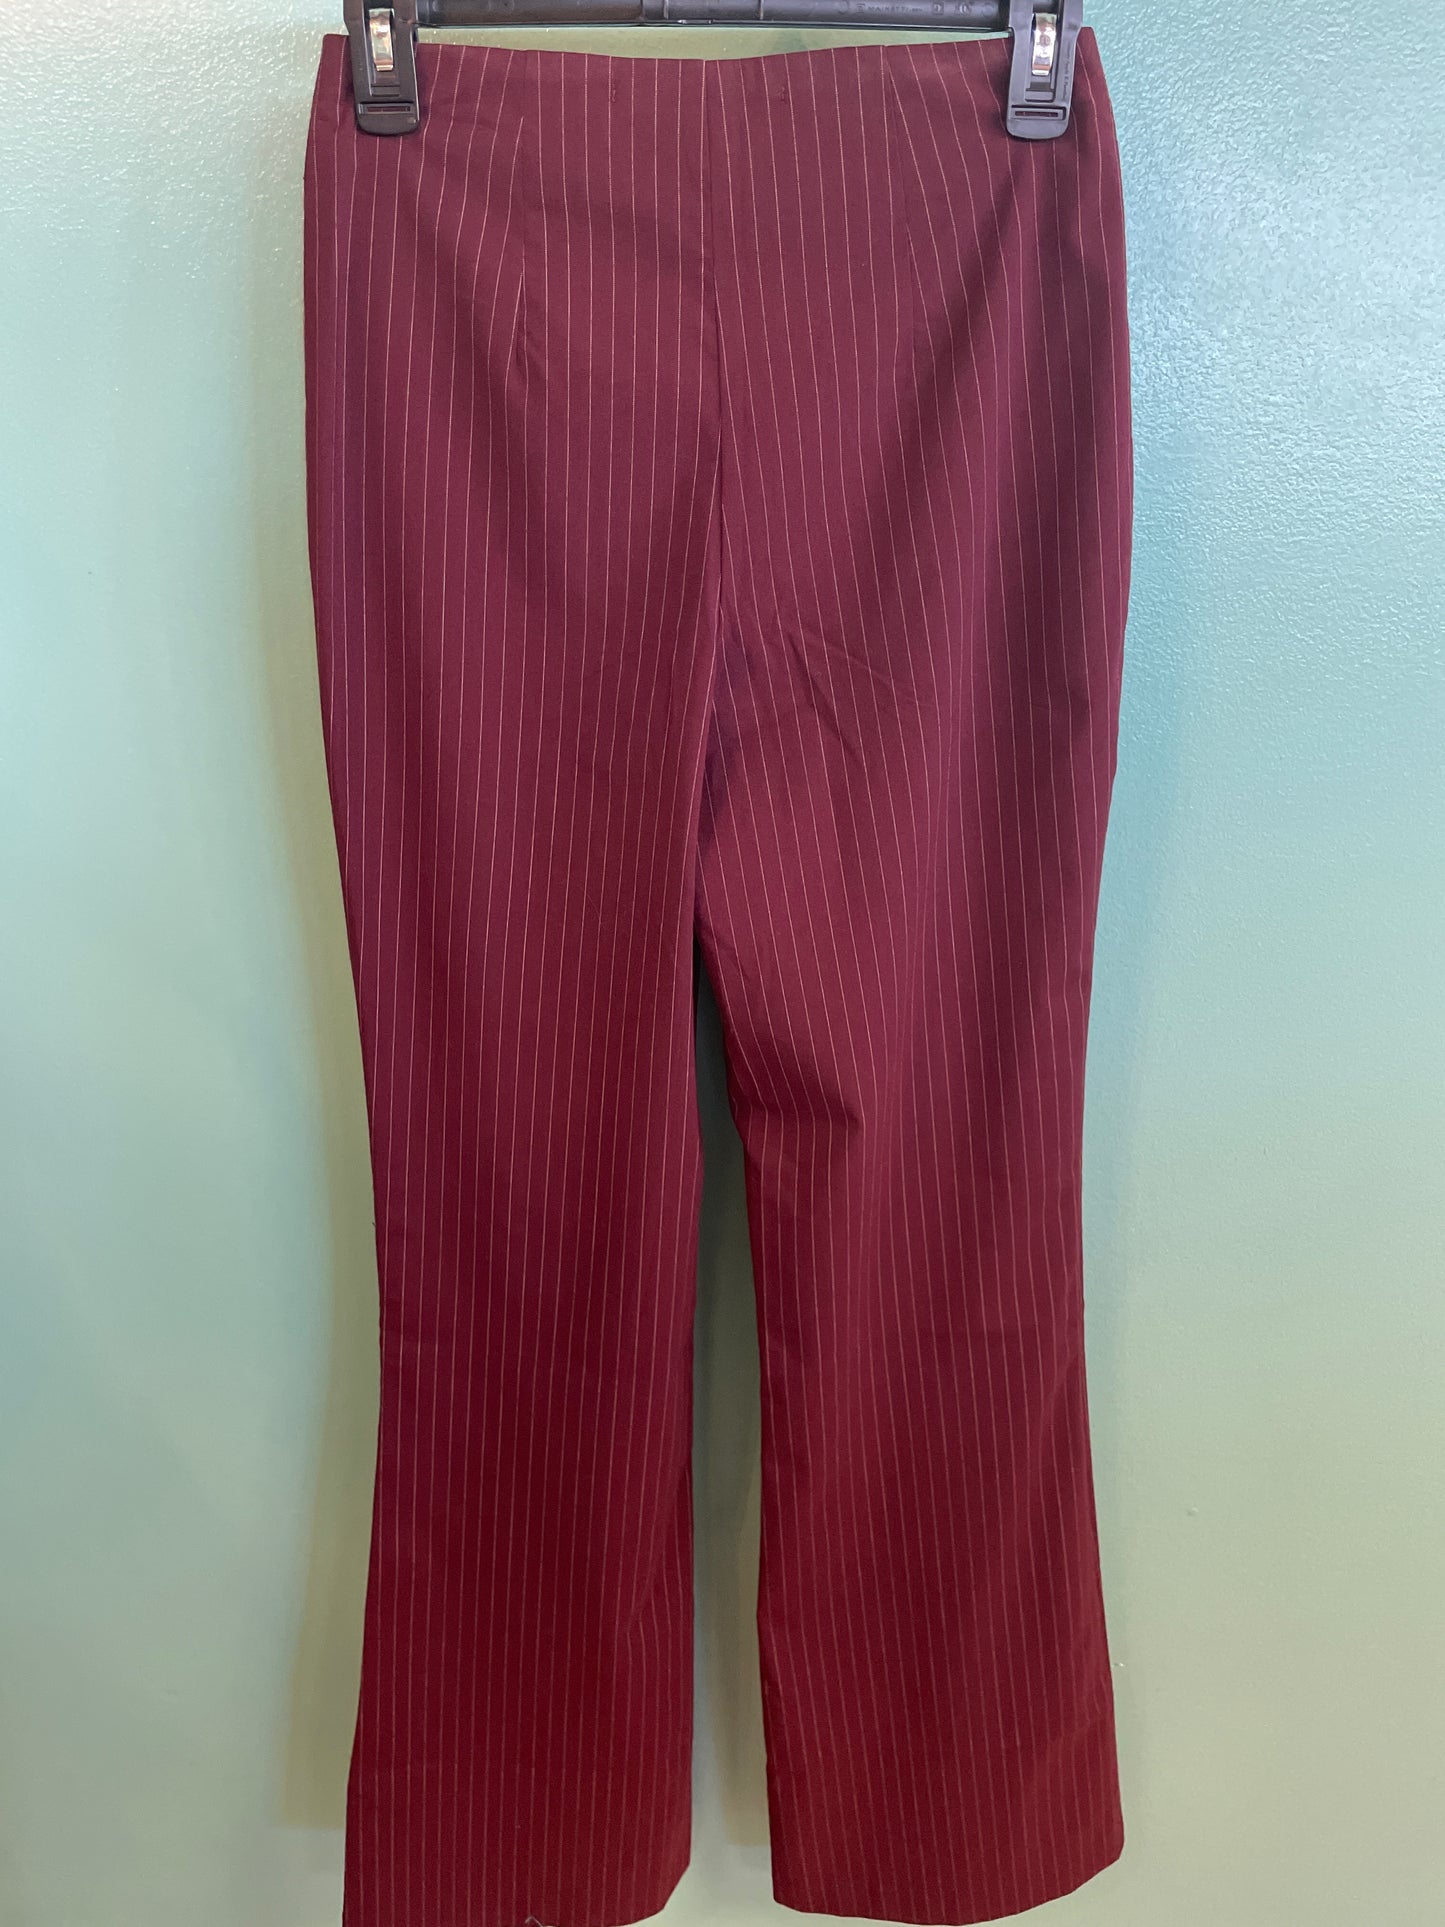 Burgundy Stripe Dress Pants